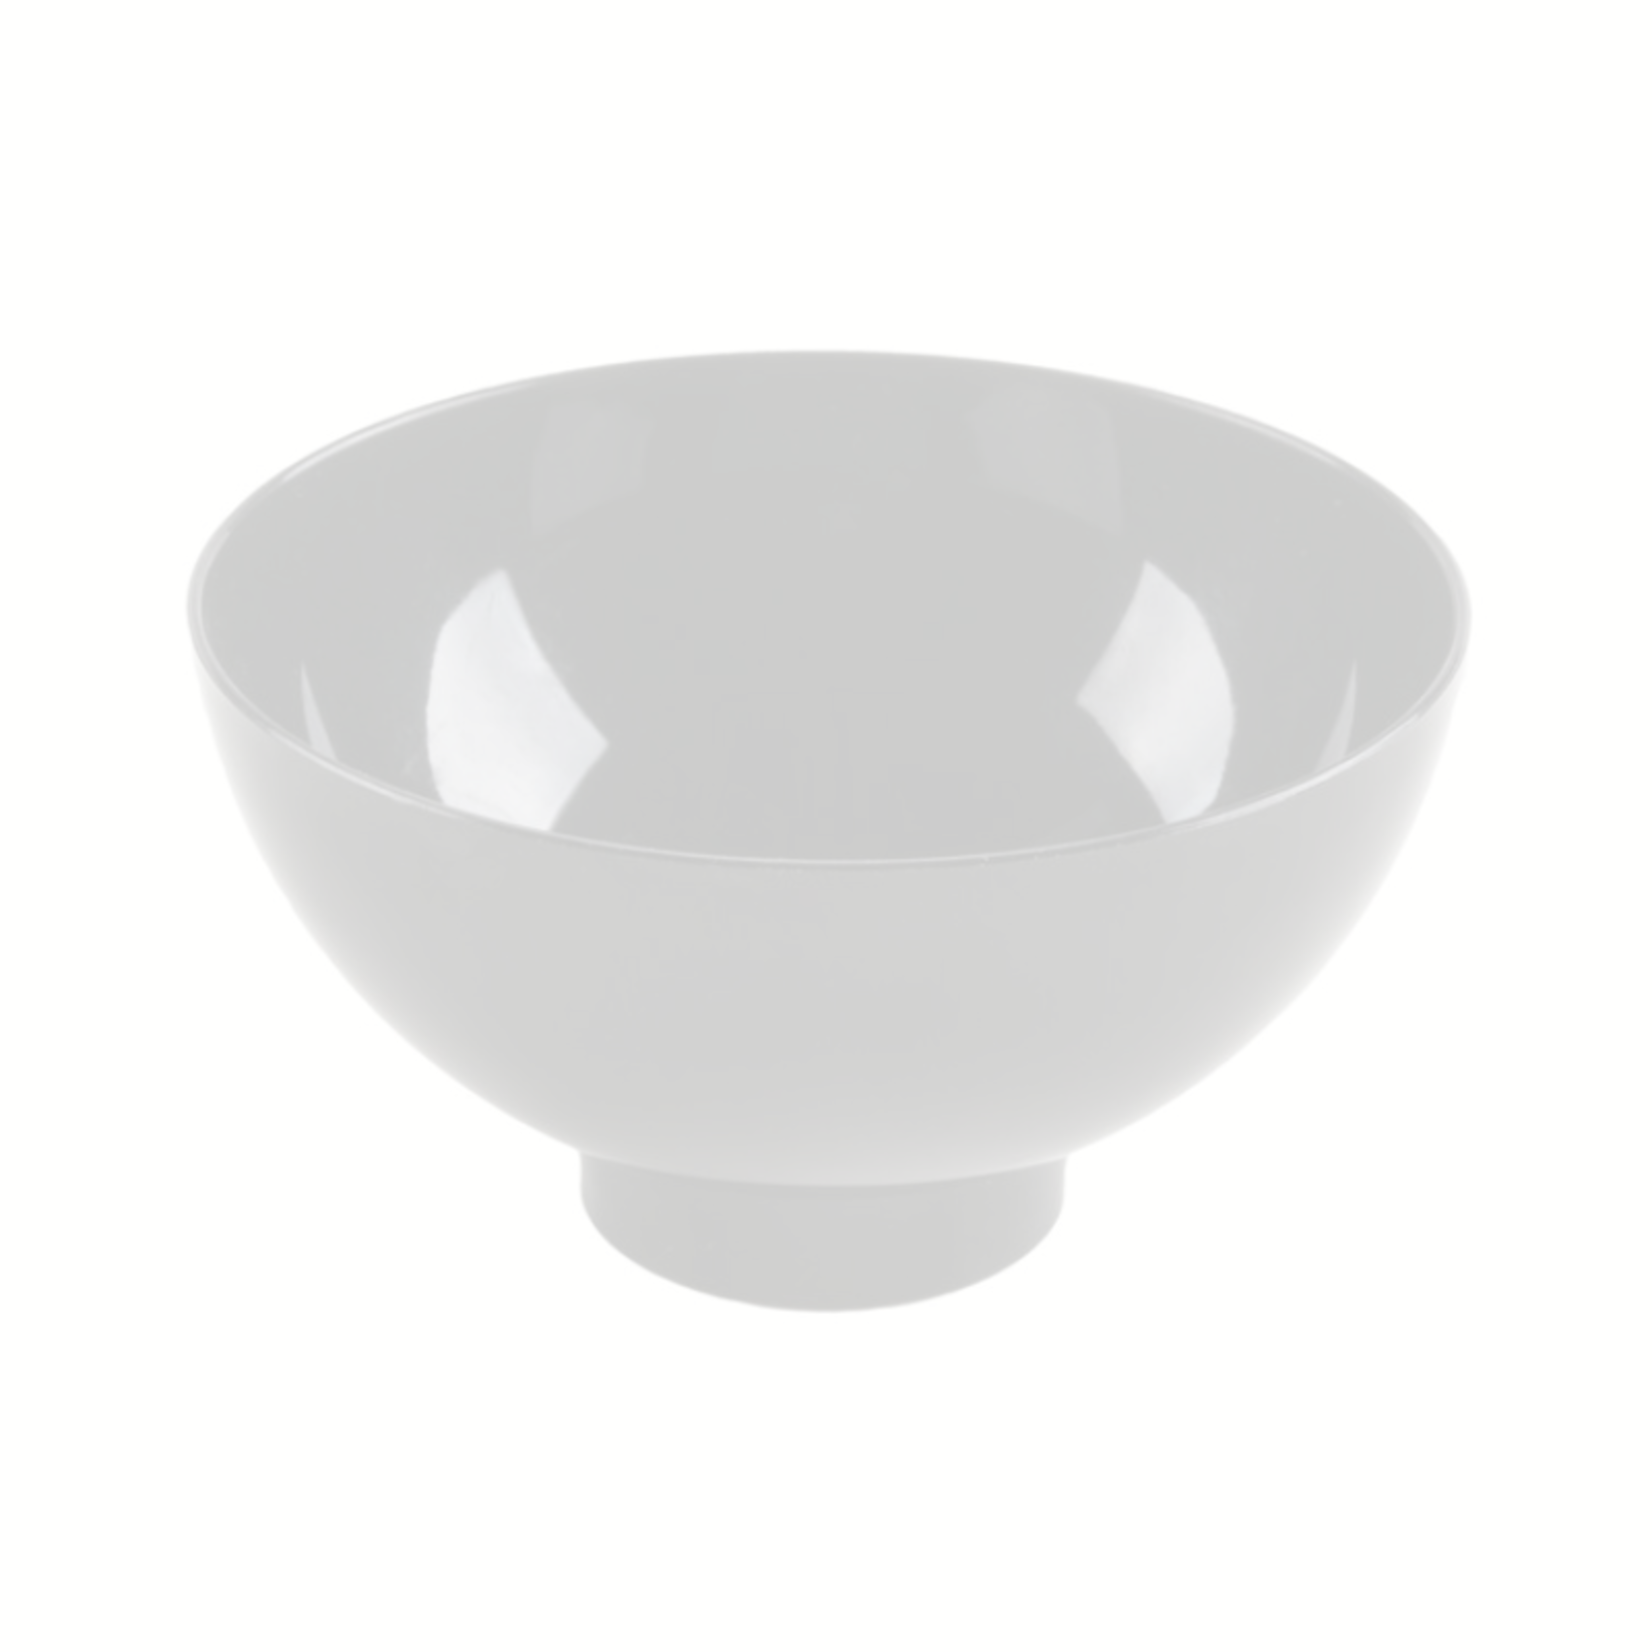 Webstaurant Clear Plastic Tiny Bowl - 2 oz - 10/pack